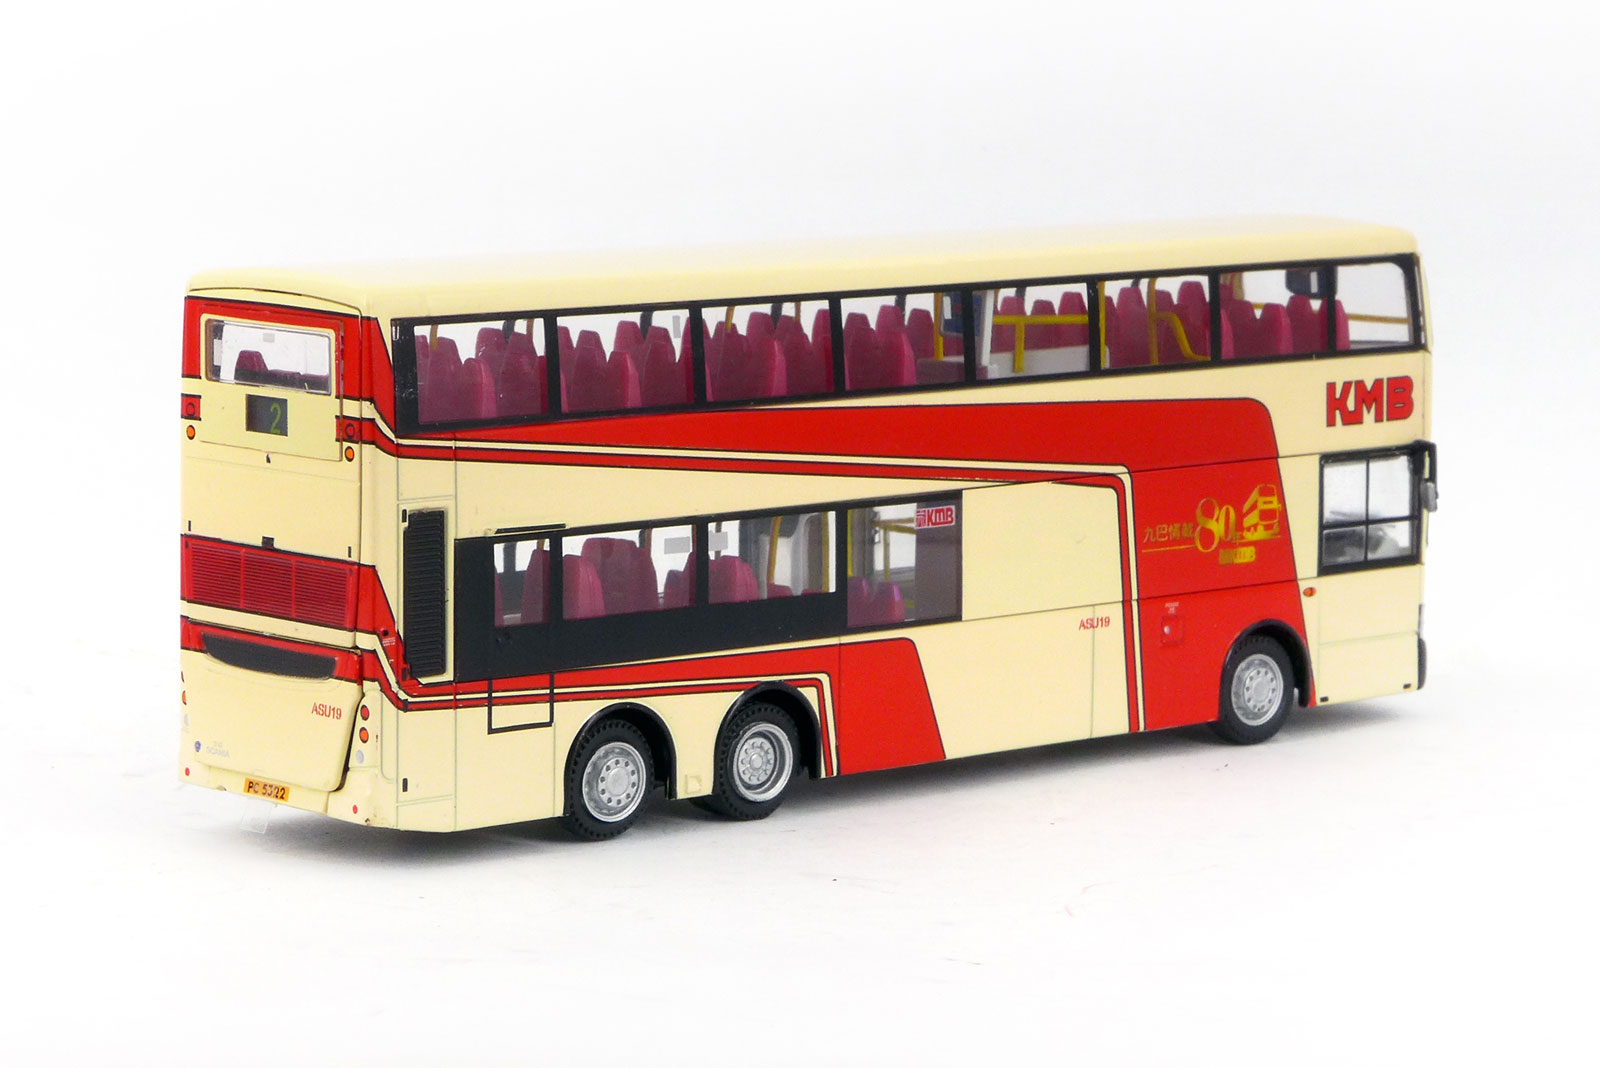 DW10807 - Scania K310UD/Caetano - Kowloon Motor Bus - Drumwell